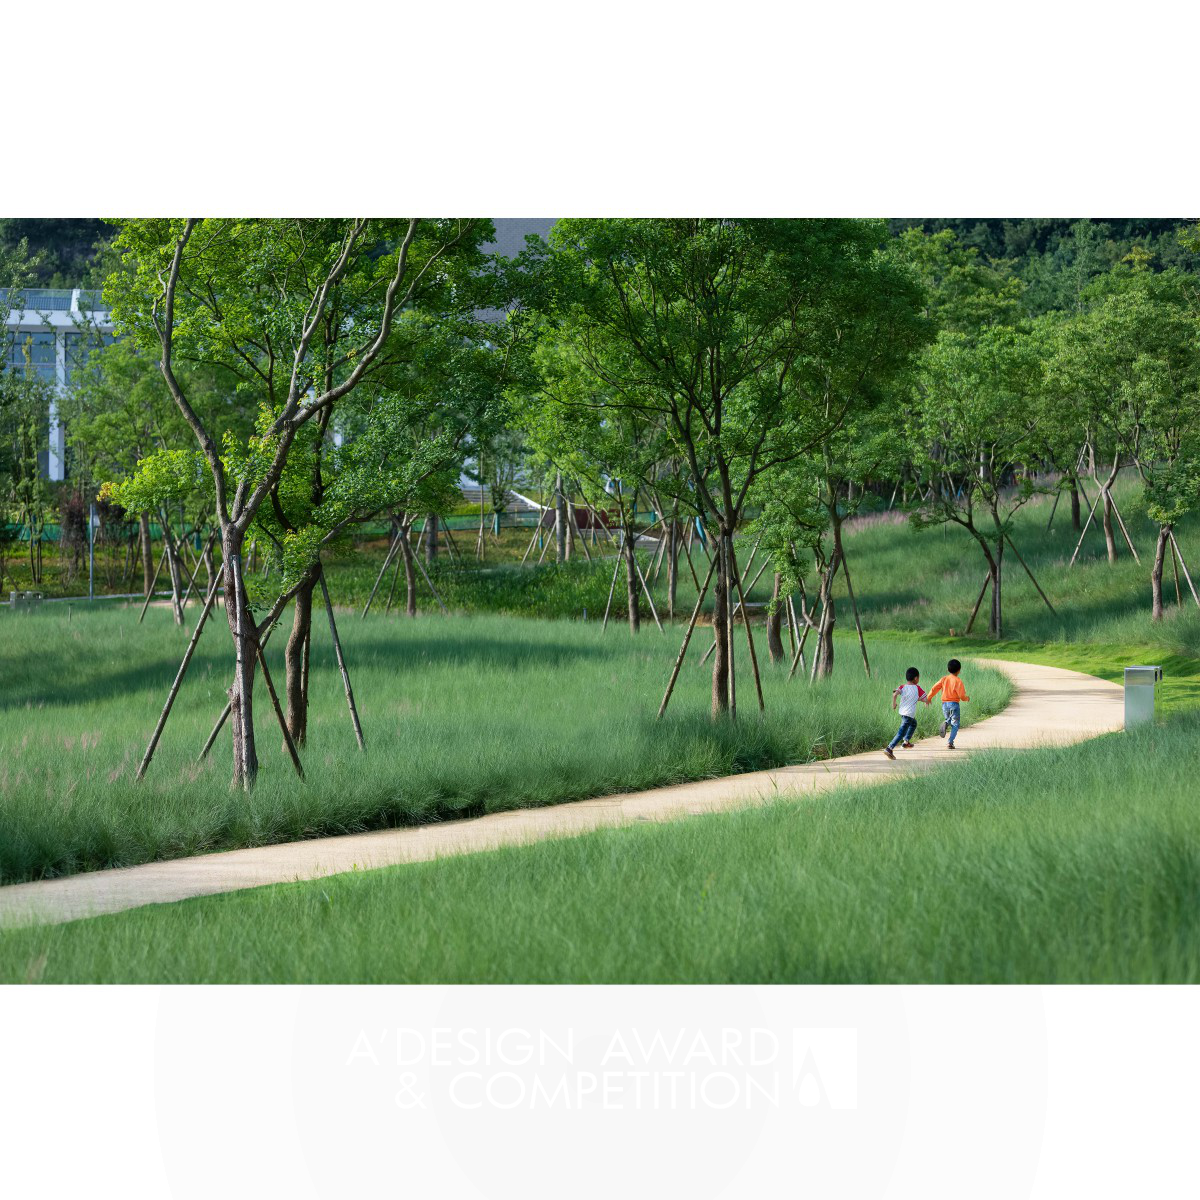 Hongshan Lake Civil Park: A New Definition of Urban Public Space